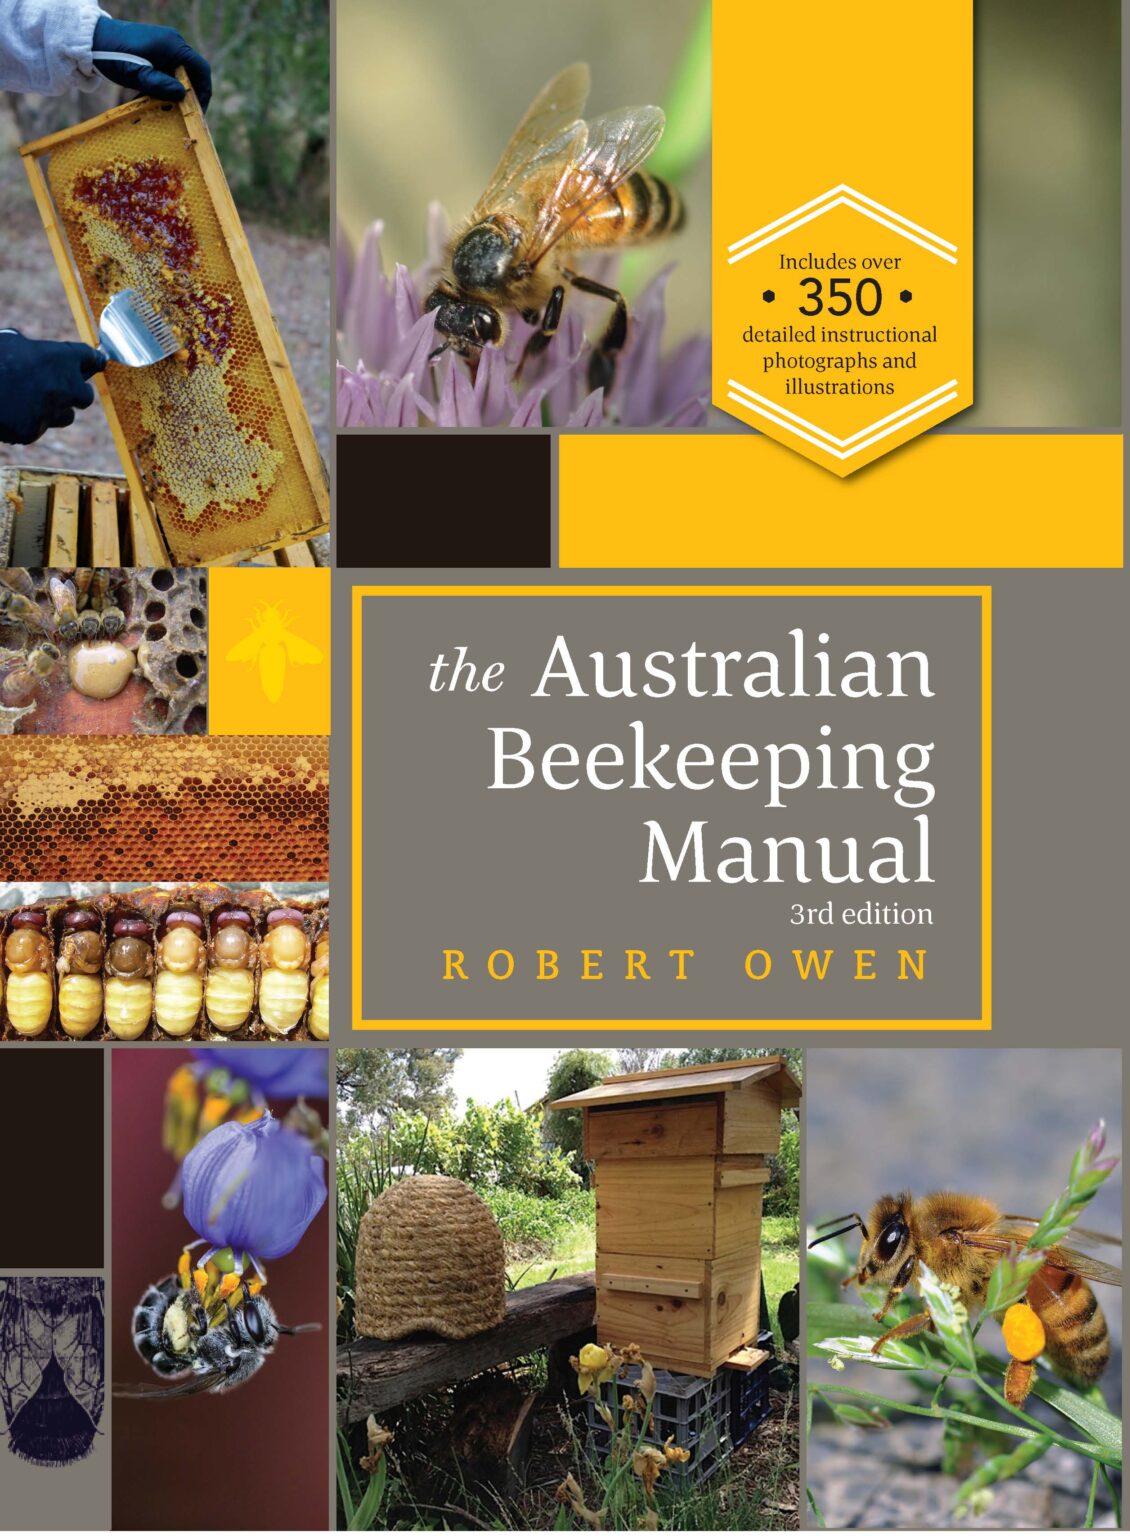 The Australian Beekeeping Manual (3rd edition)